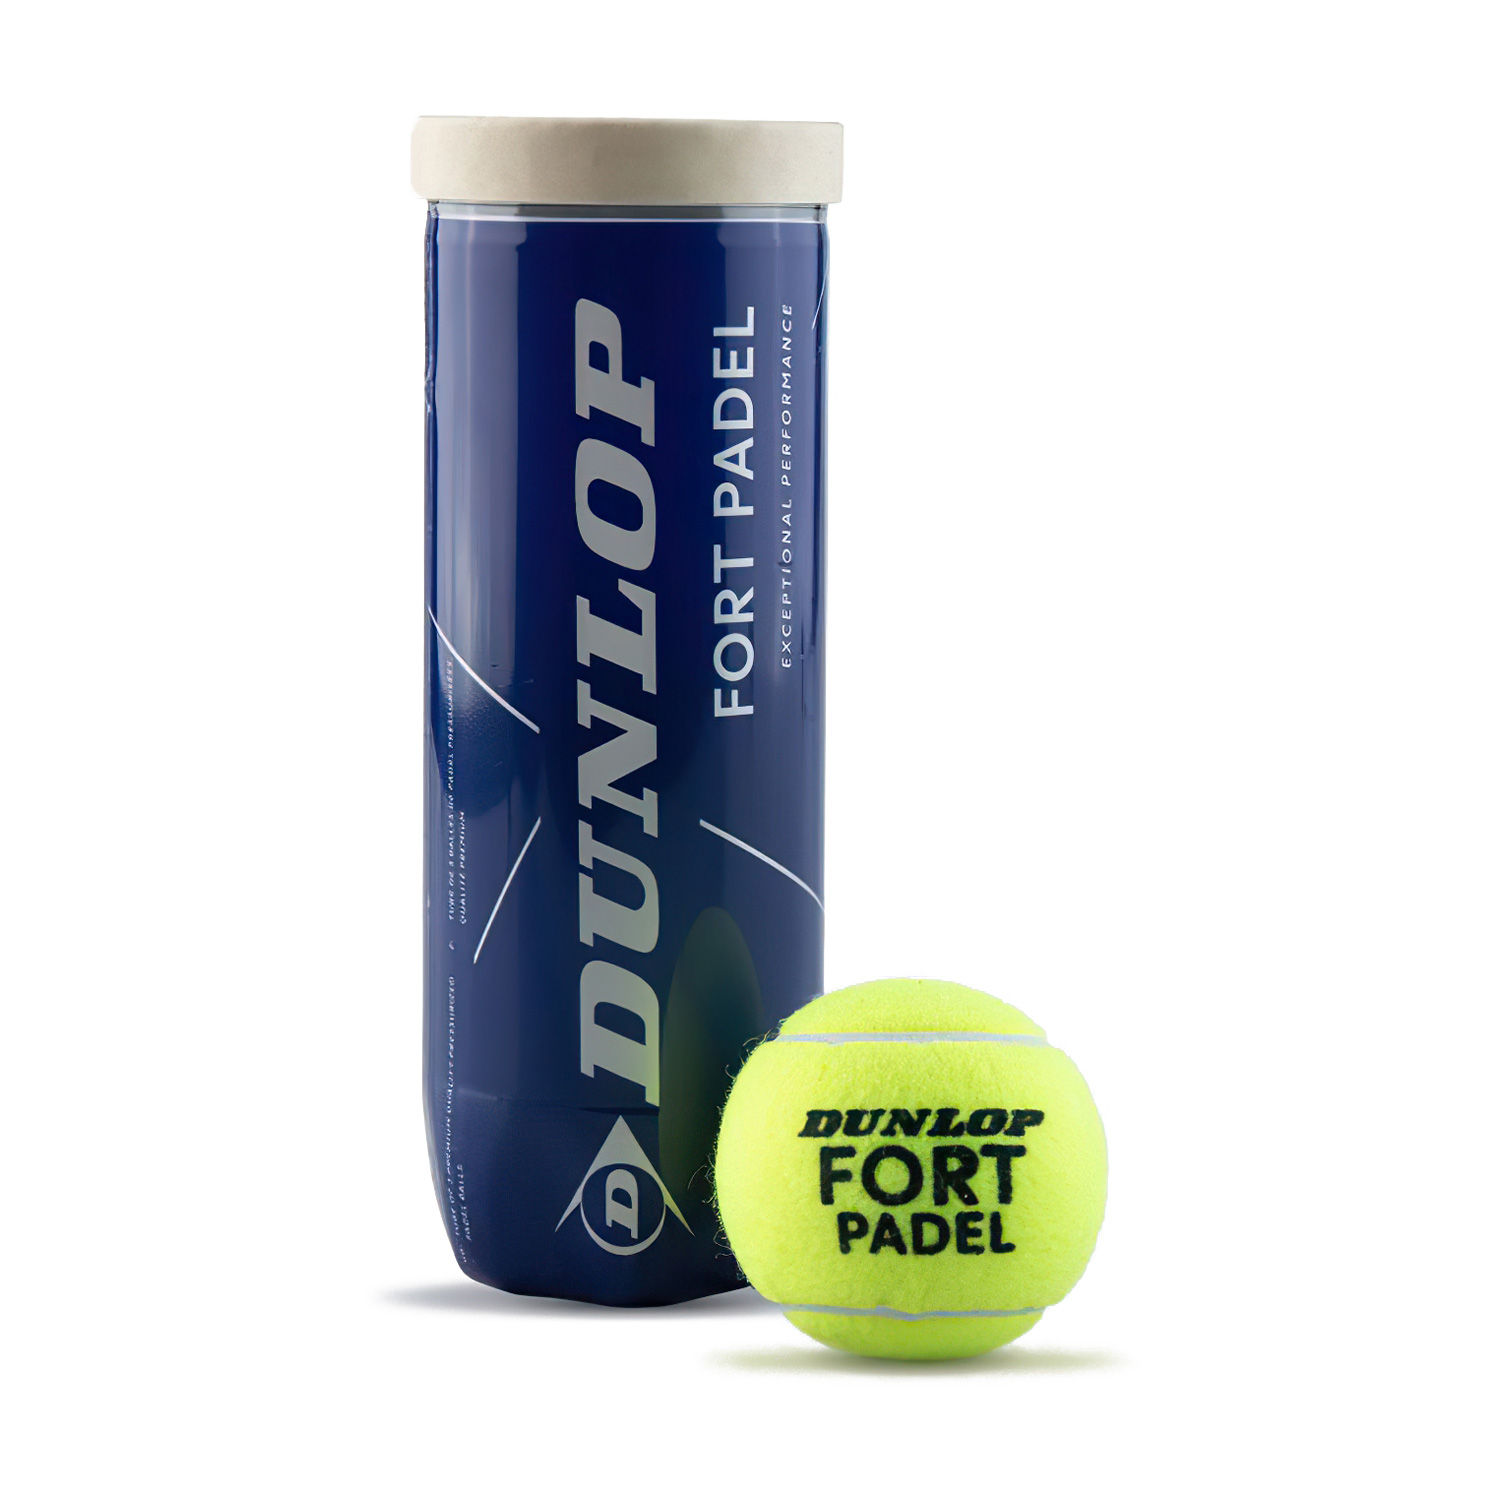 Dunlop Fort Padel - 3 Balls Can